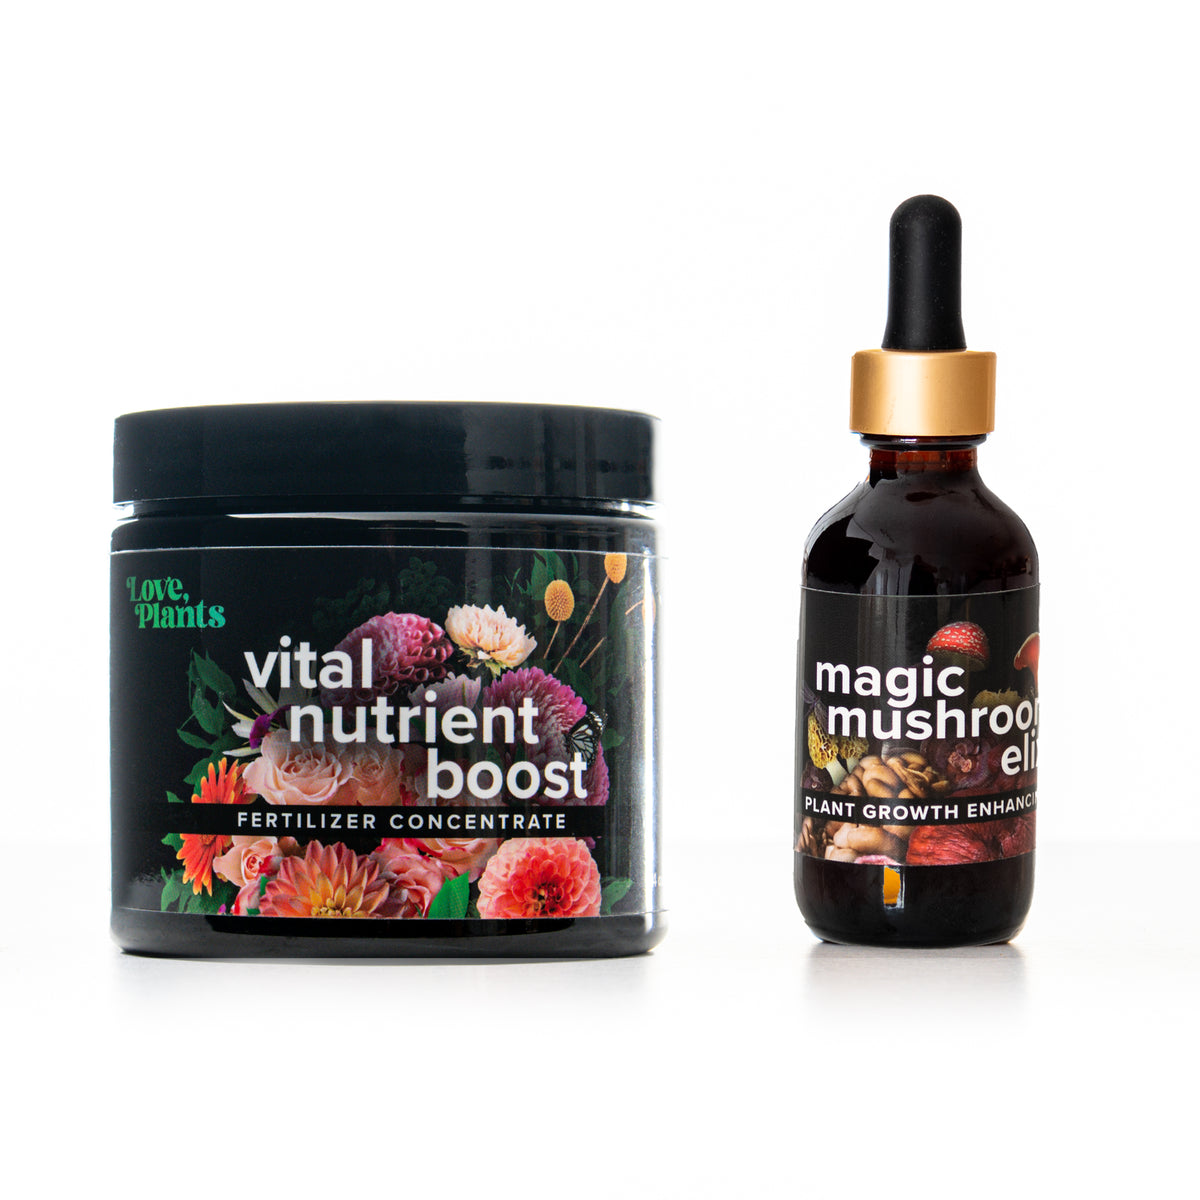 Product image of Vital Nutrient Boost and Magic Mushroom Elixir